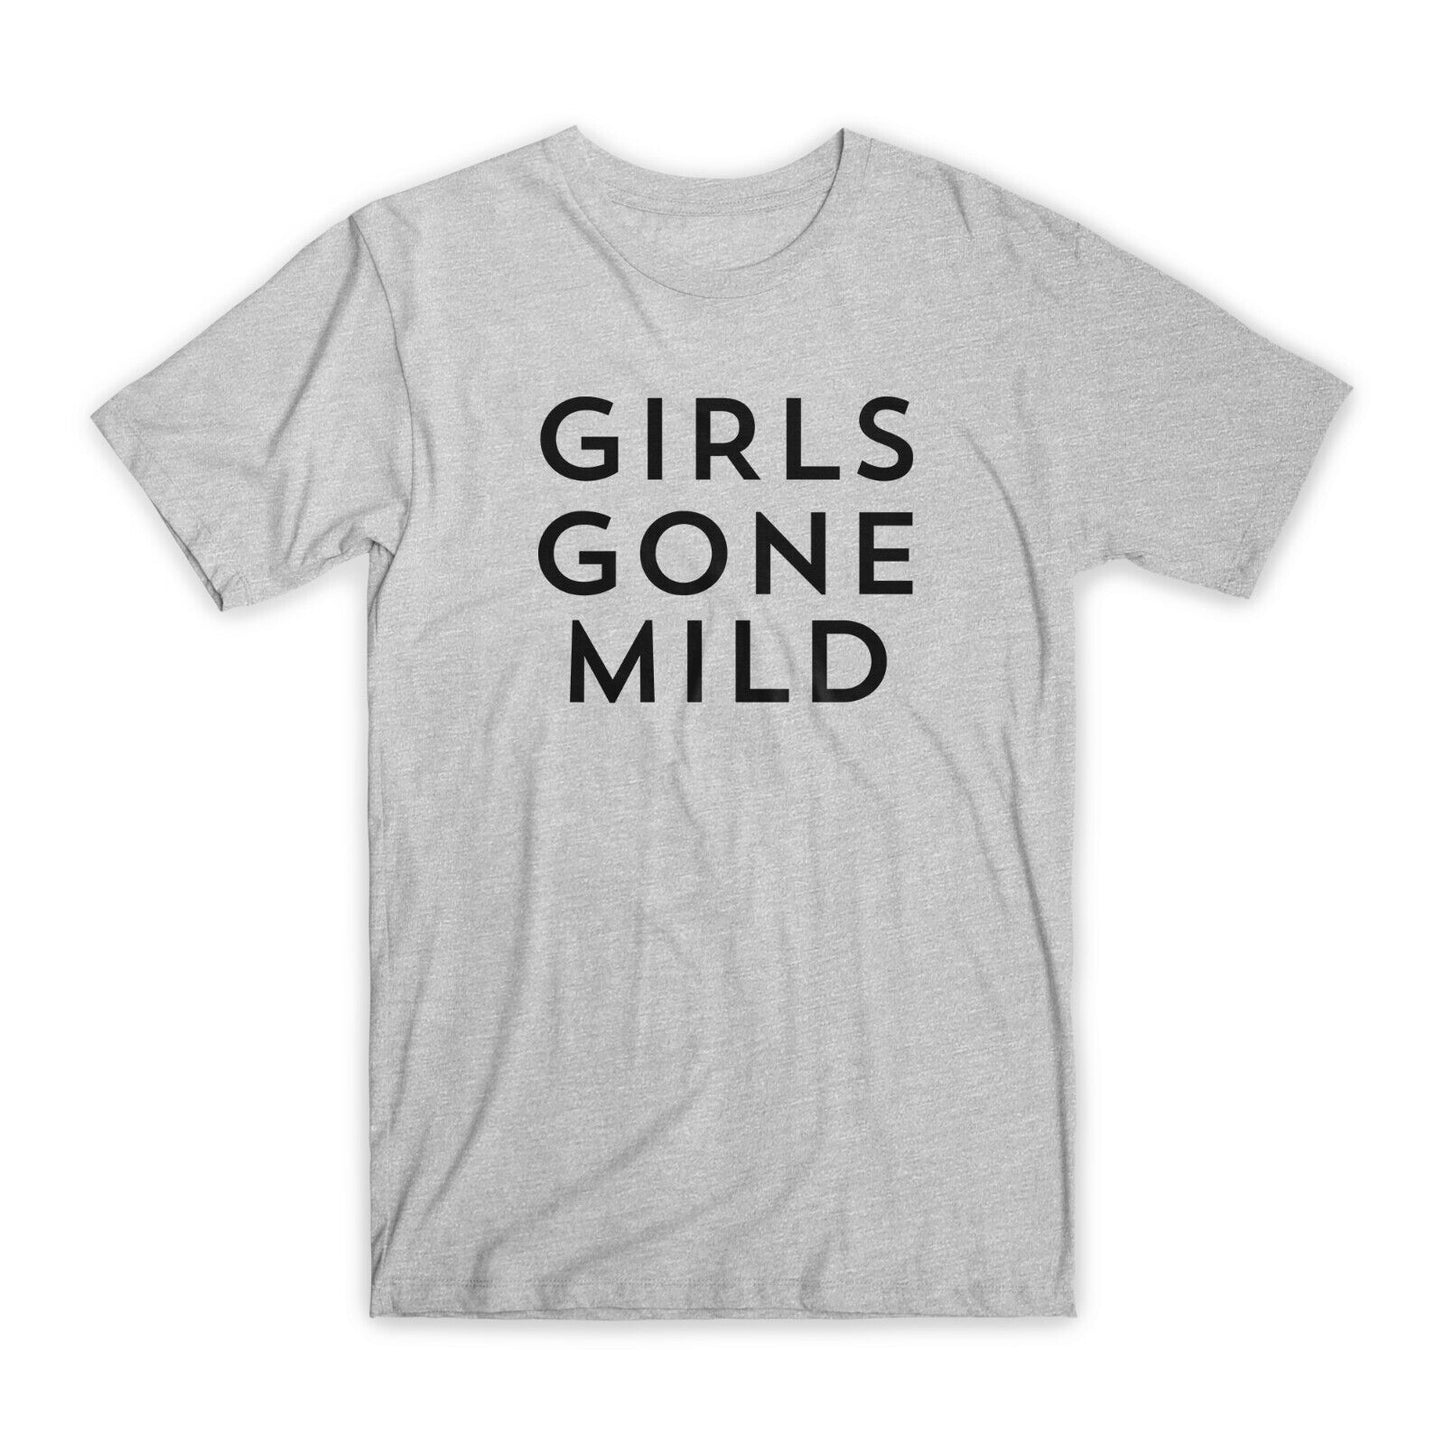 Girls Gone Mild T-Shirt Premium Soft Cotton Crew Neck Funny Tee Novelty Gift NEW